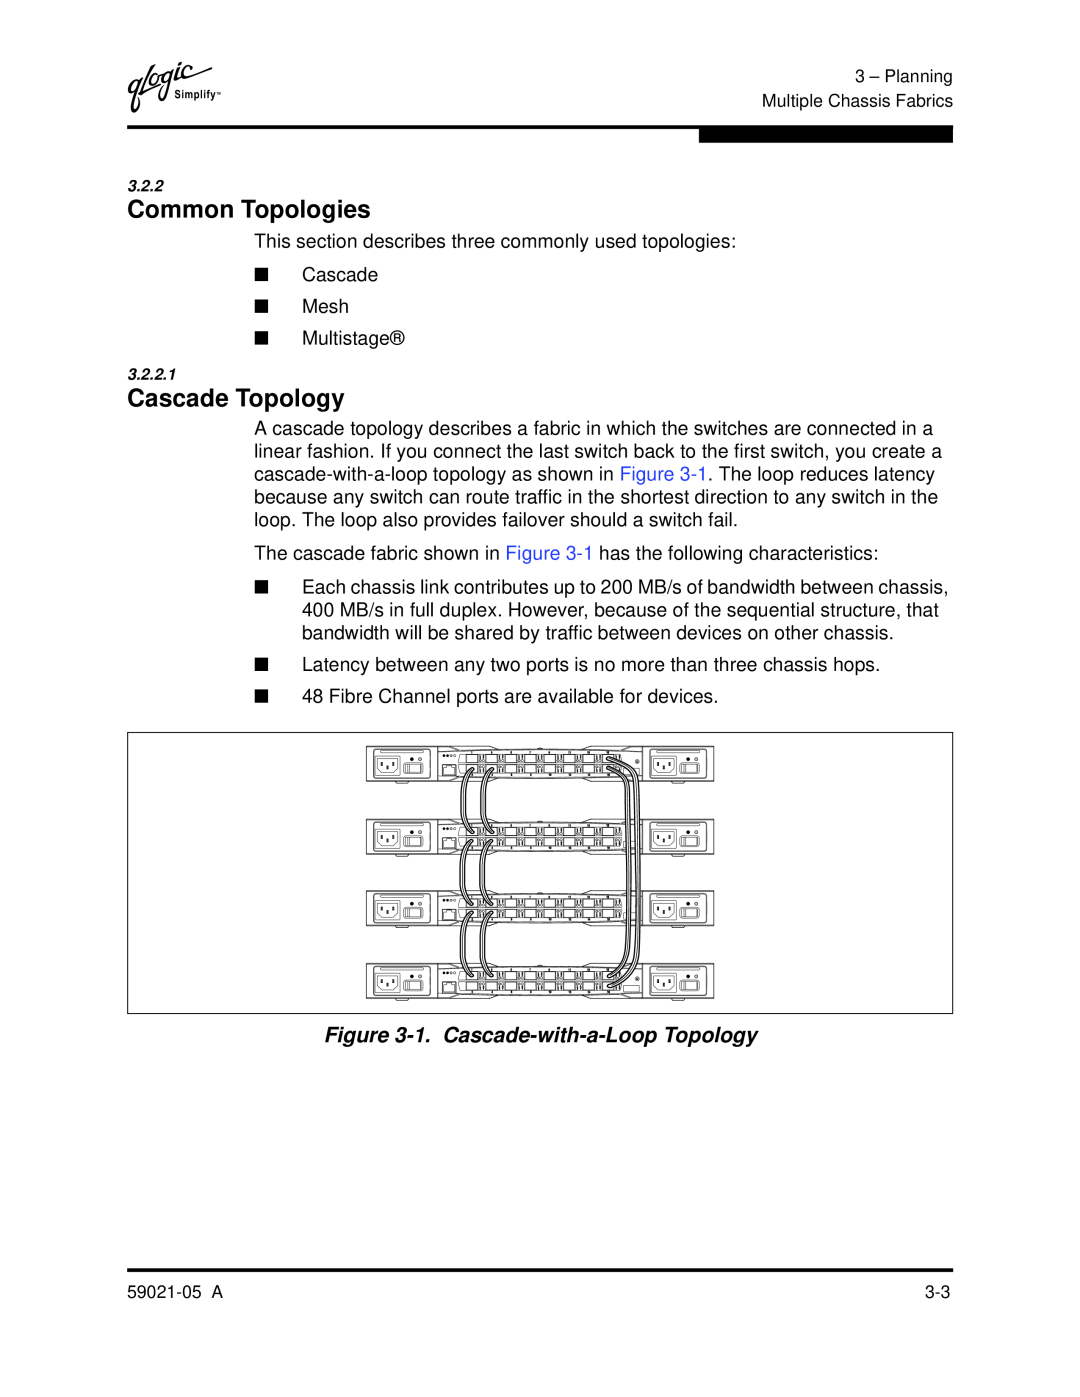 Q-Logic 59021-05 manual Common Topologies, Cascade Topology, 1. Cascade-with-a-Loop Topology 